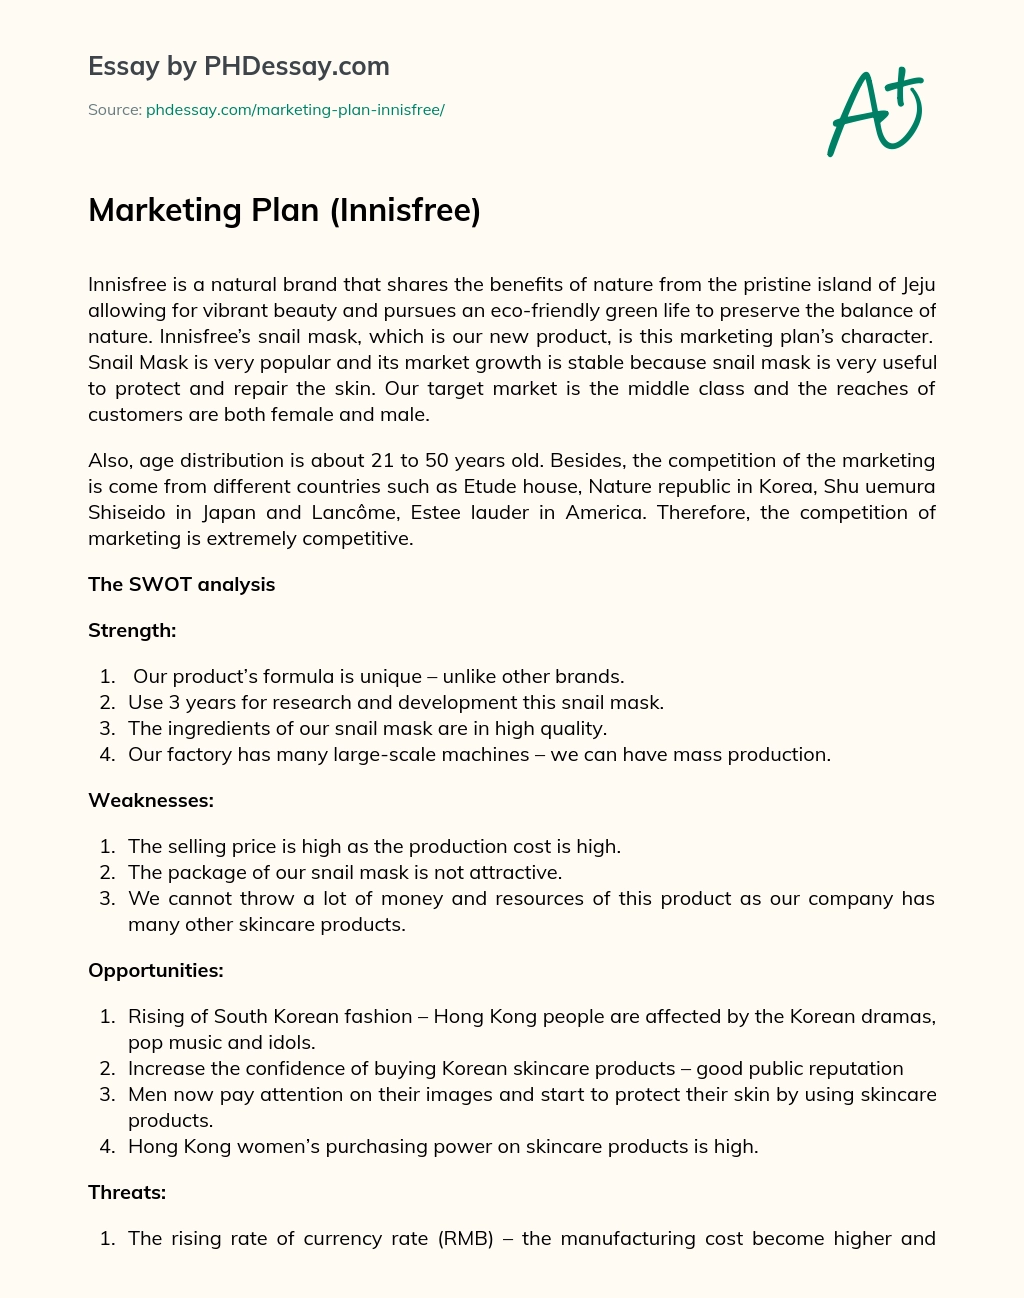 Marketing Plan (Innisfree) essay